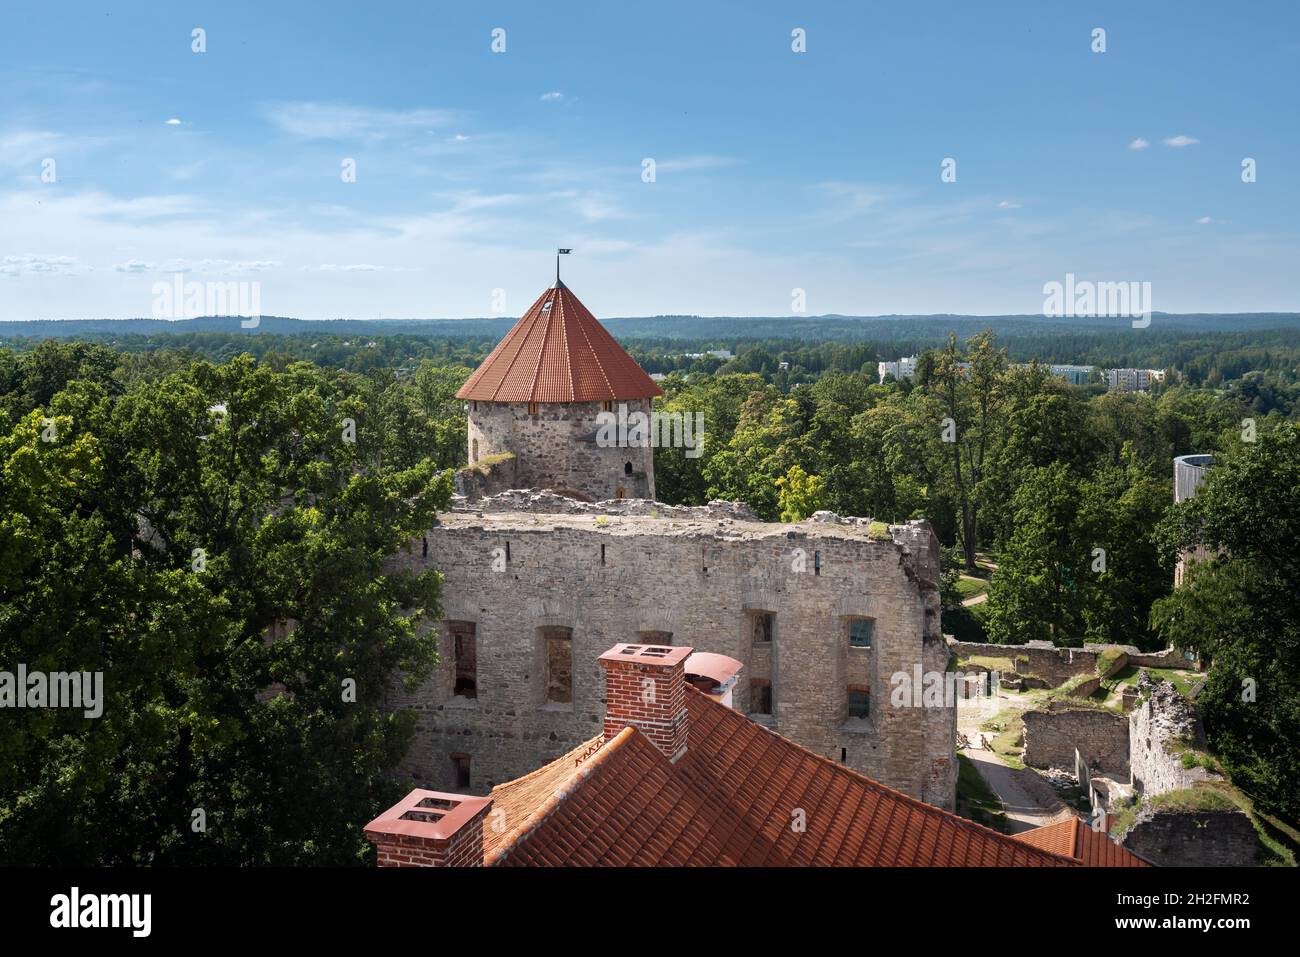 Aerial view of Cesis Castle - Livonian Order medieval castle ruins - Cesis, Latvia Stock Photo